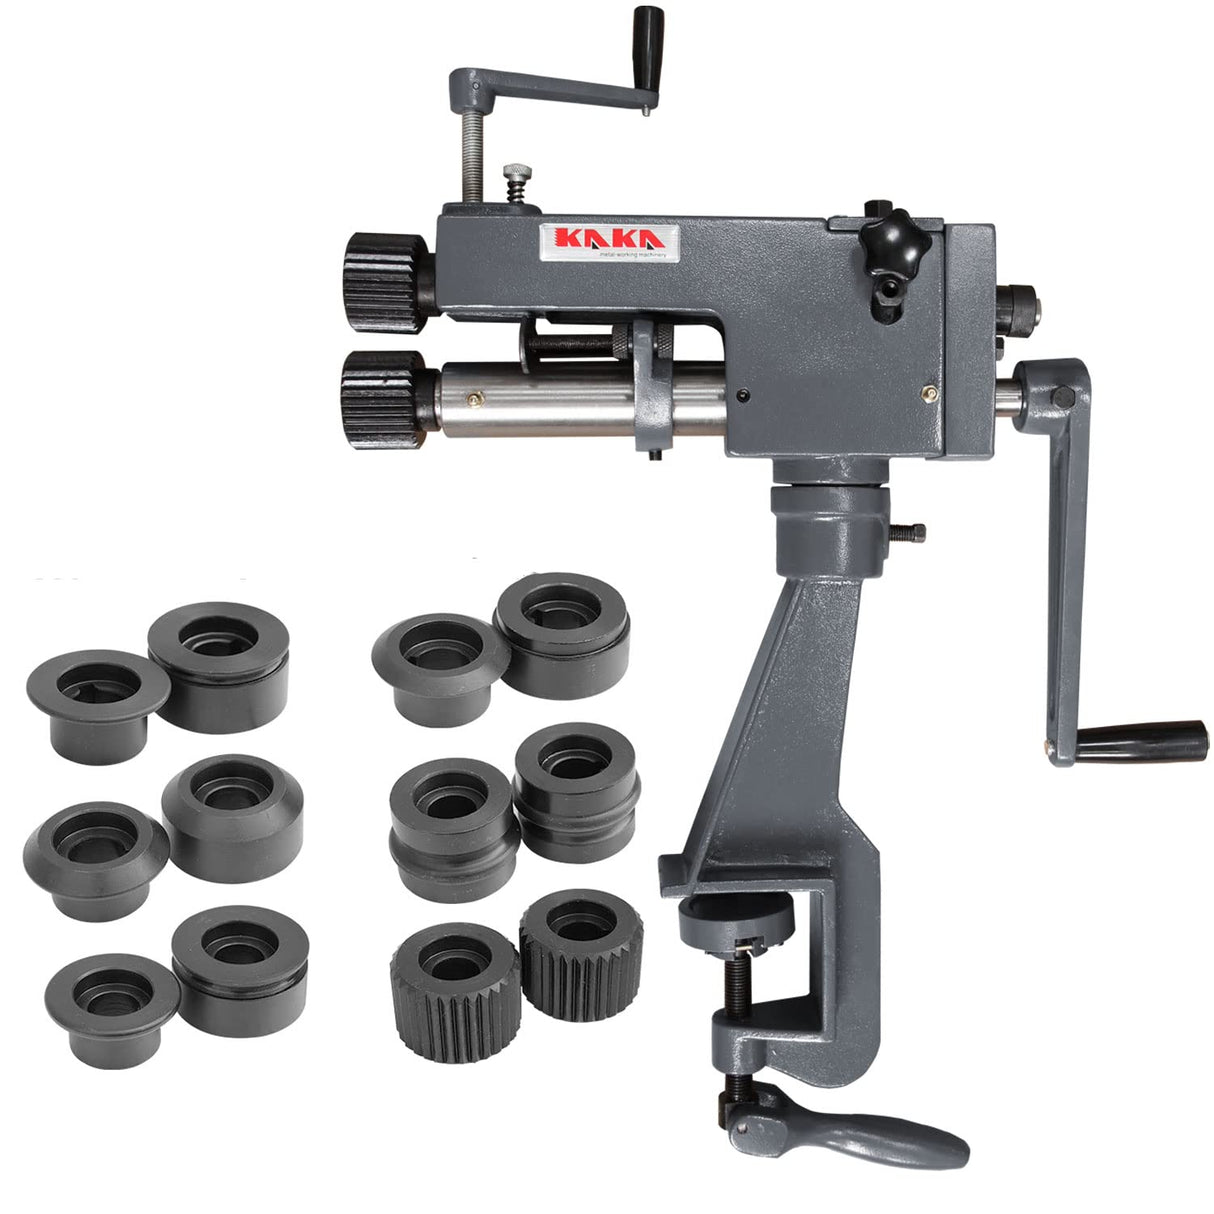 KANG Industrial RM-08, 177mm Throat Cast-Iron Bead Roller, 0.8mm